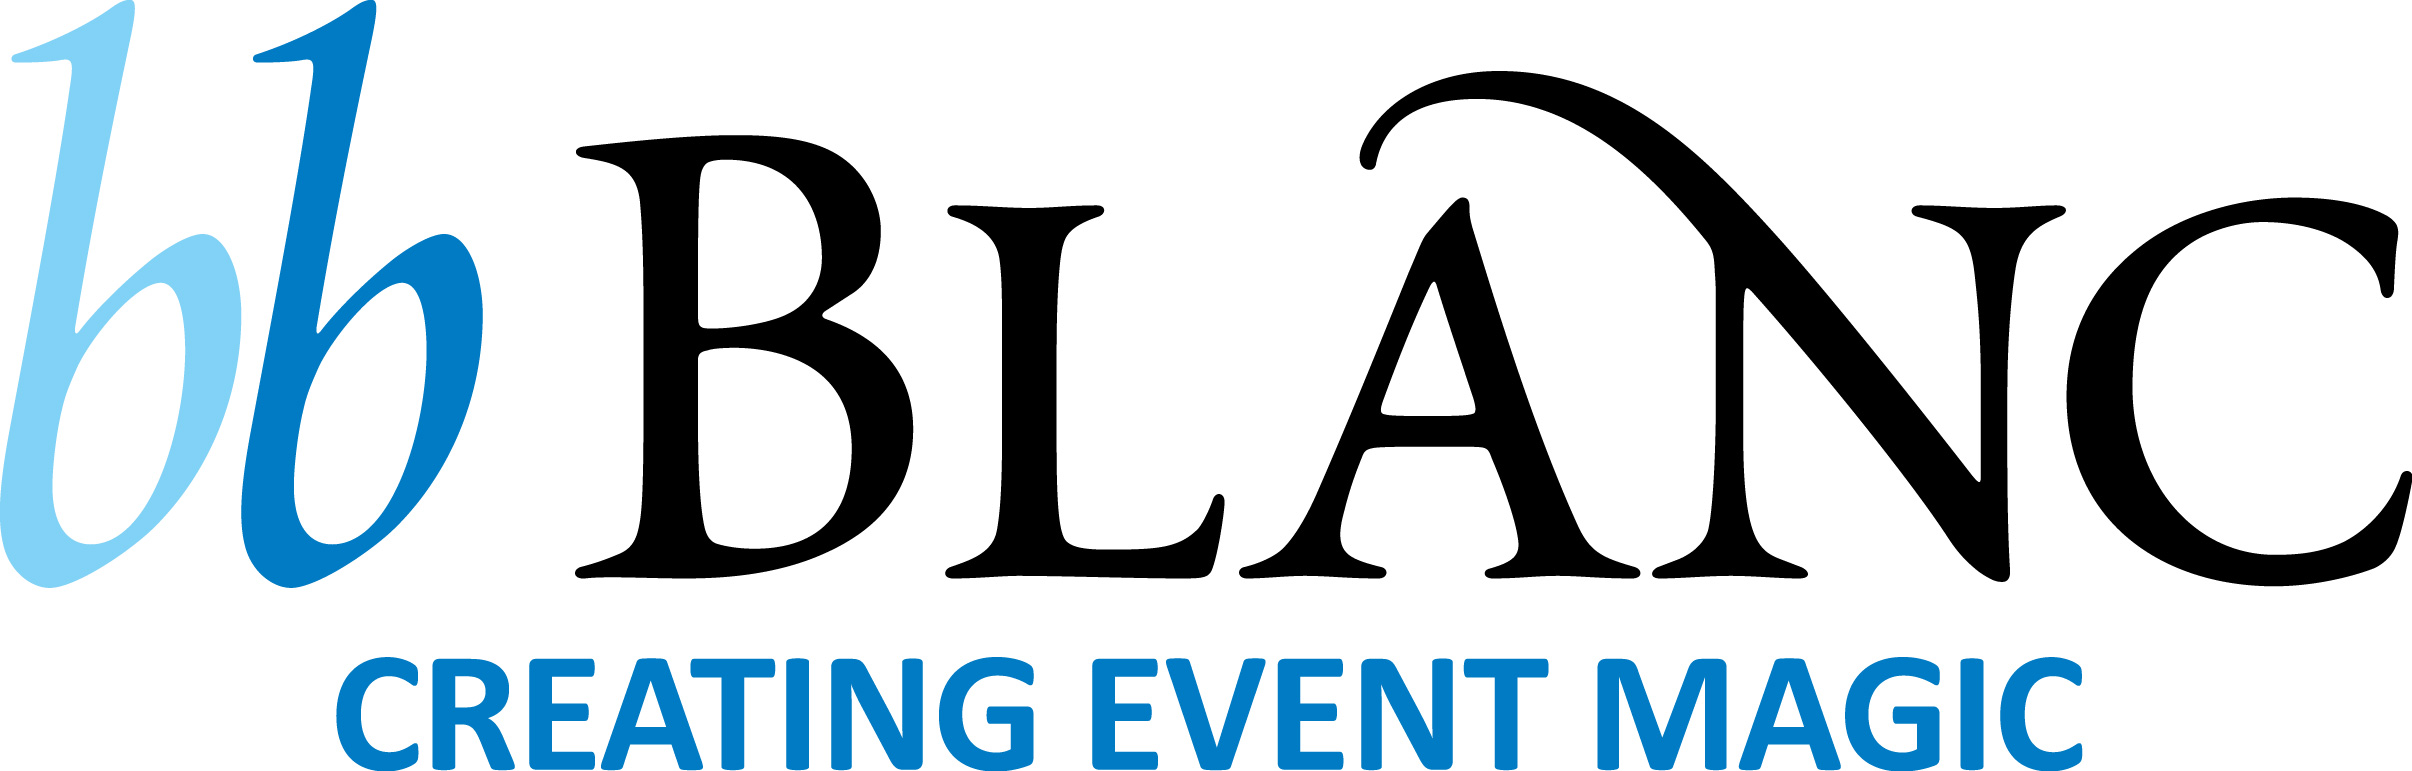 bbblanc Logo